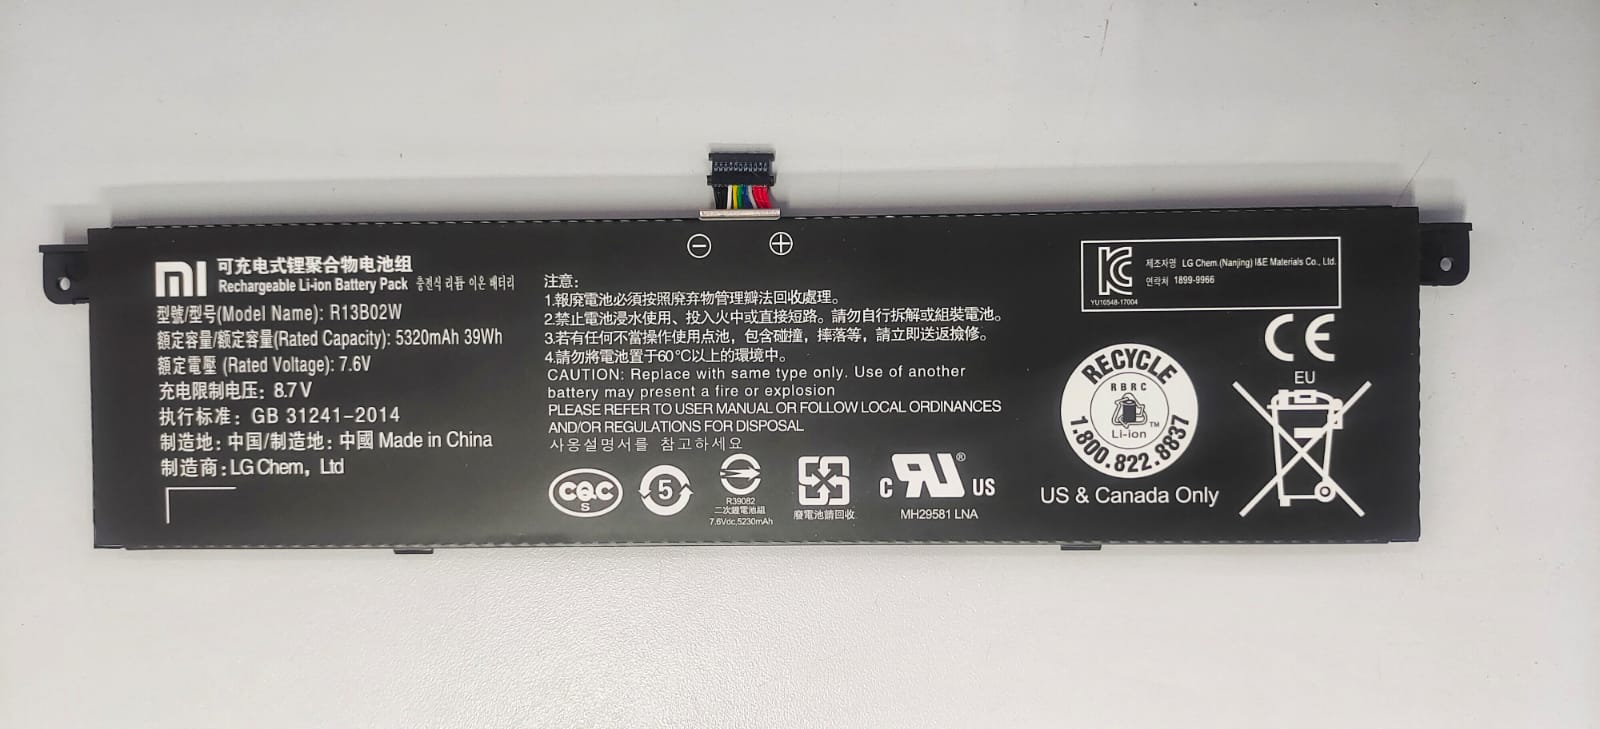 Original R13B02W R13B01W Laptop Battery compatible with Xiaomi Mi Air 13.3